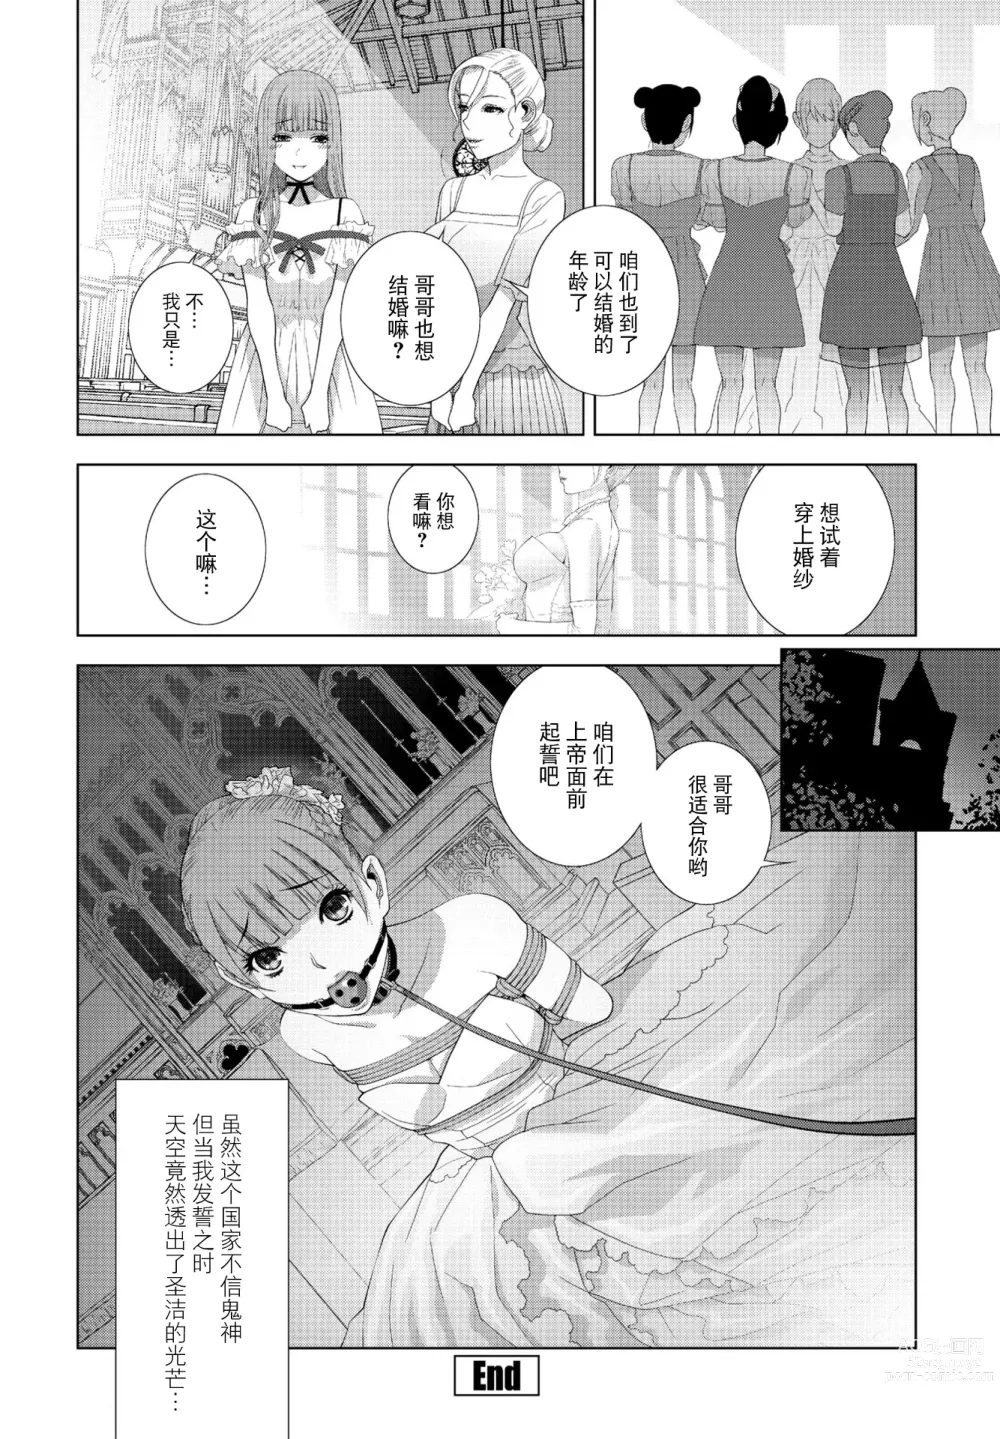 Page 20 of manga Imouto ni Chikau Hi